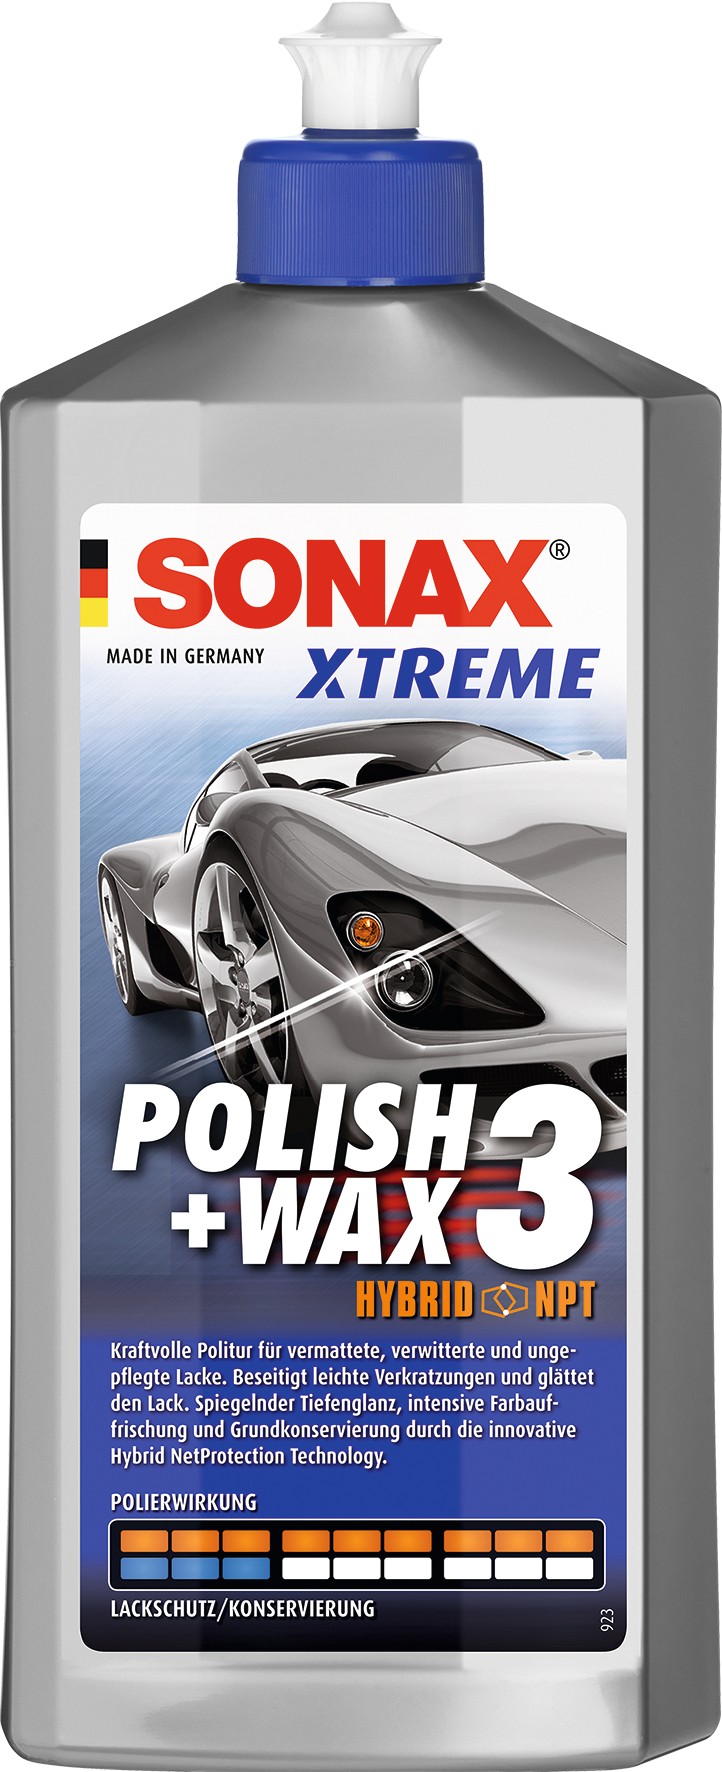 Schleifpolitur/Wachs Xtreme 500ml Polish + Wax 3 Hybrid